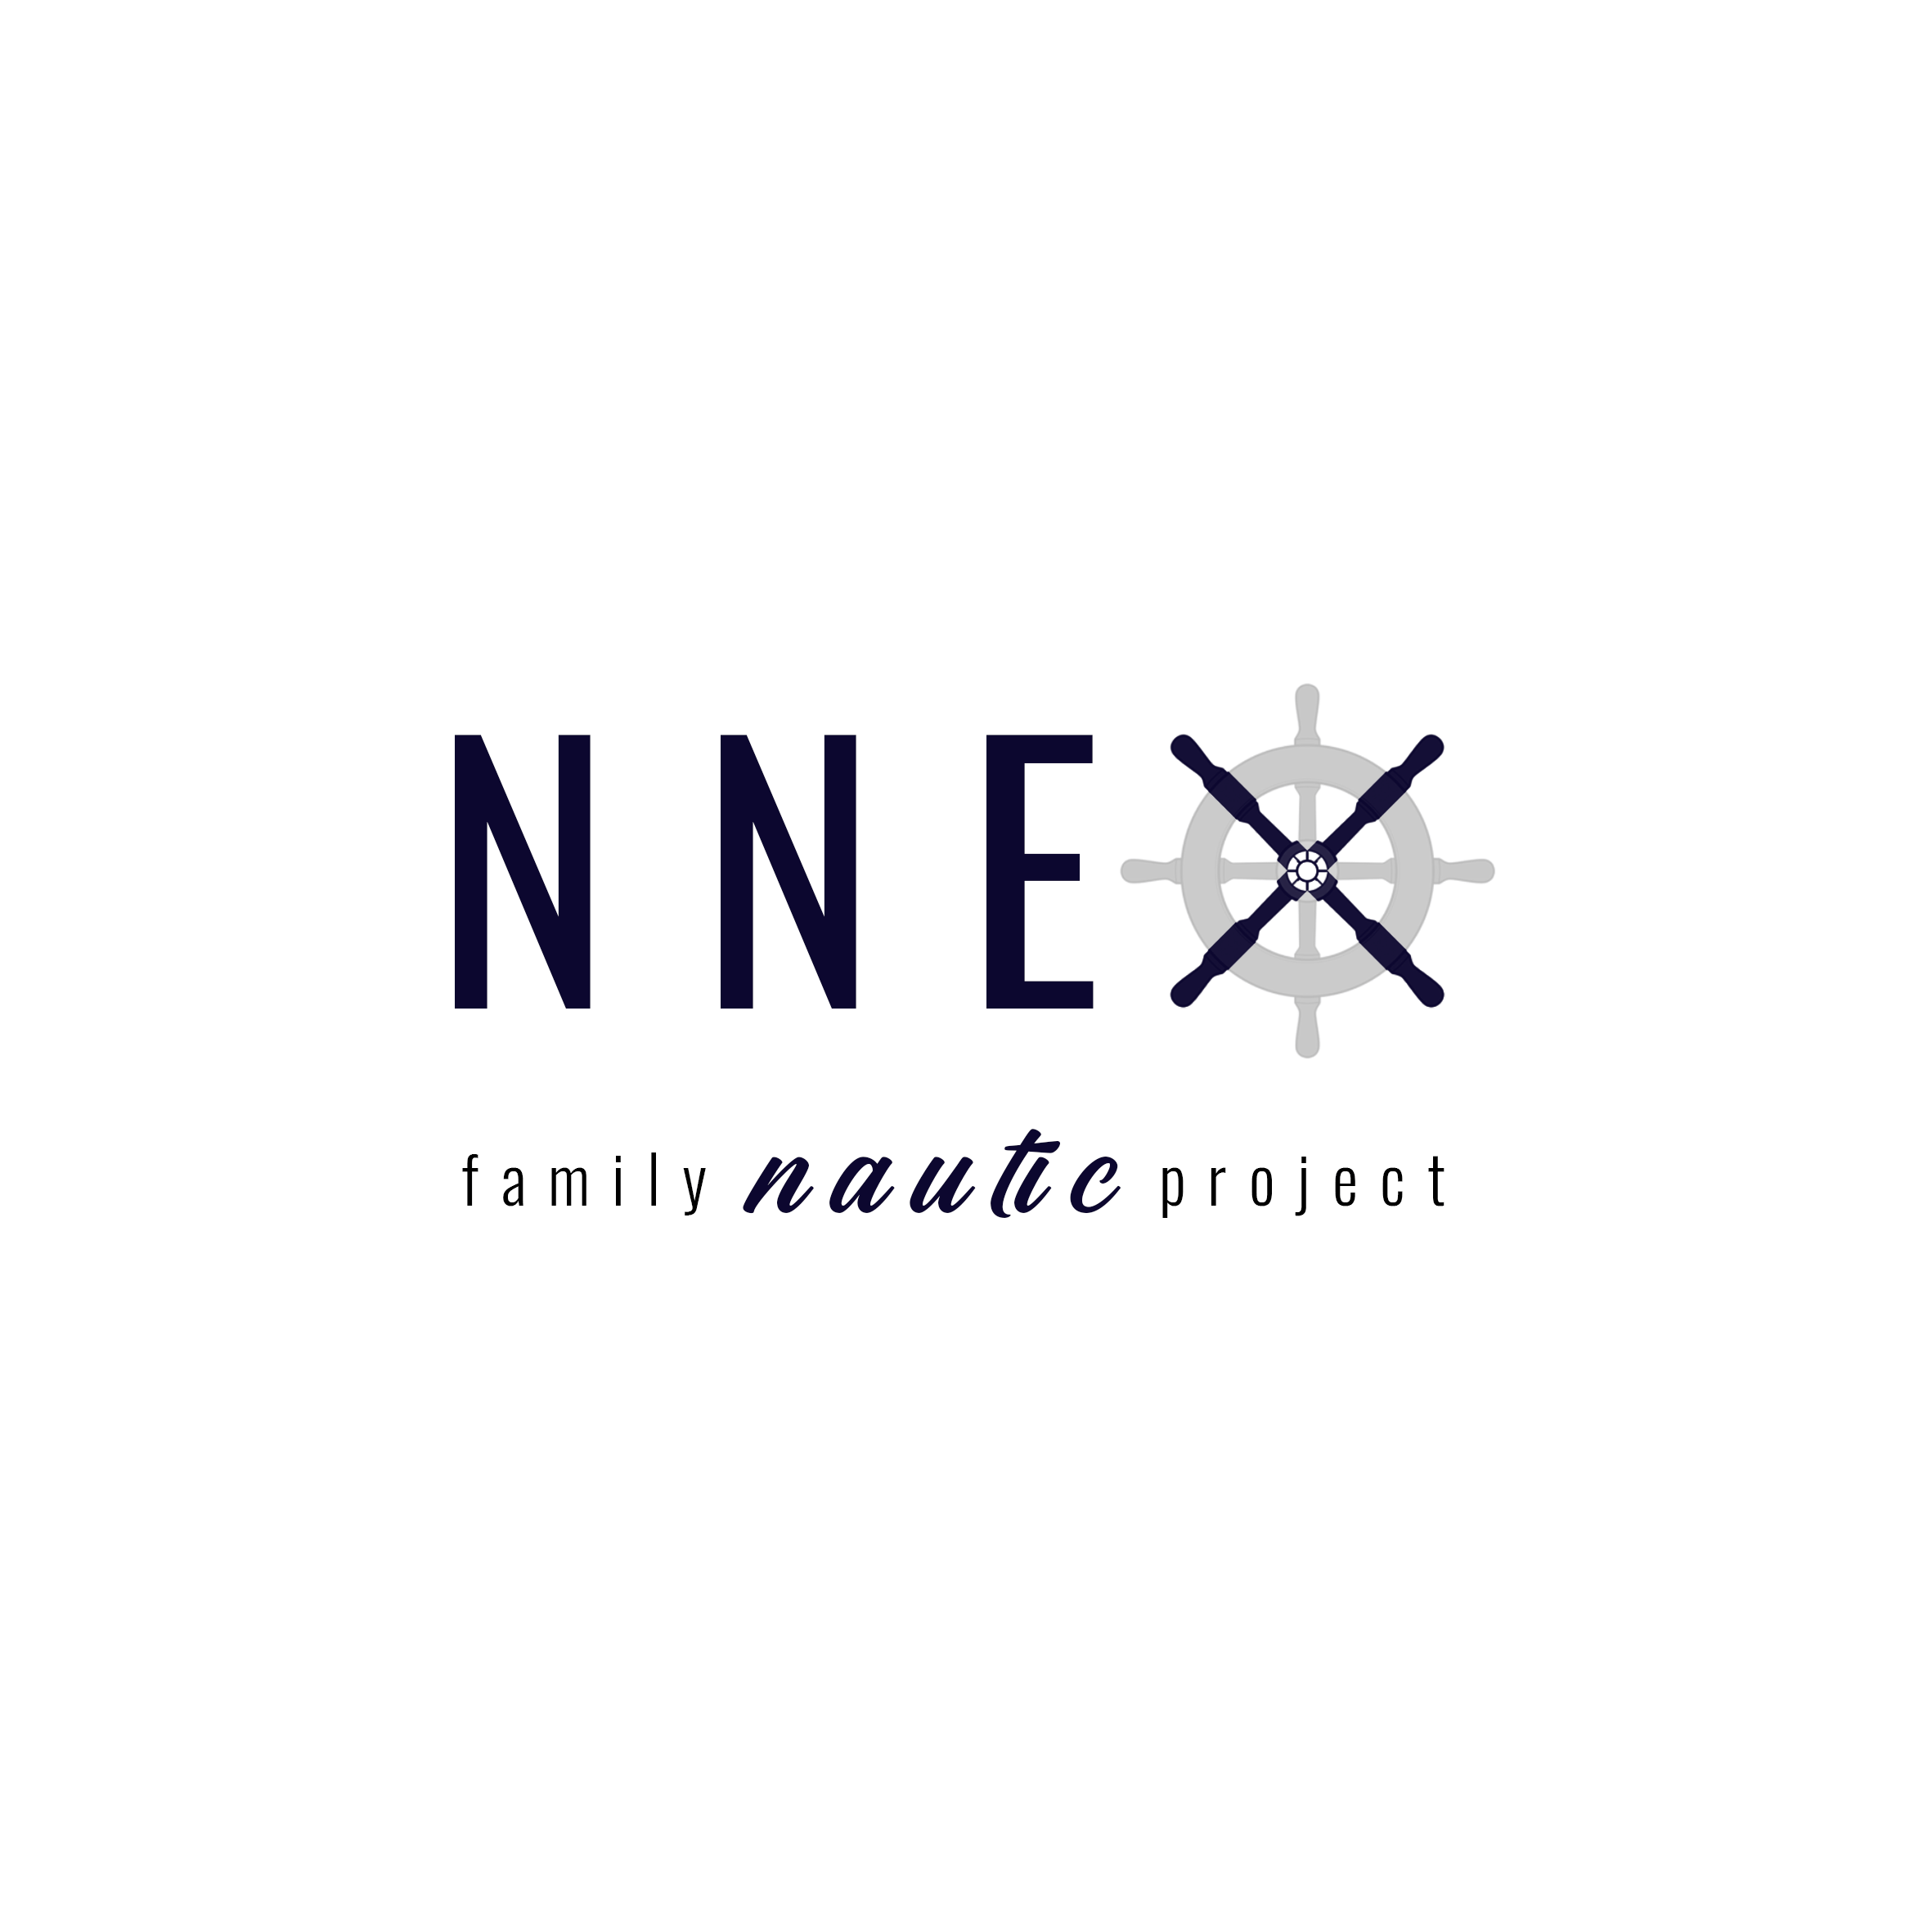 NNEX Innovation